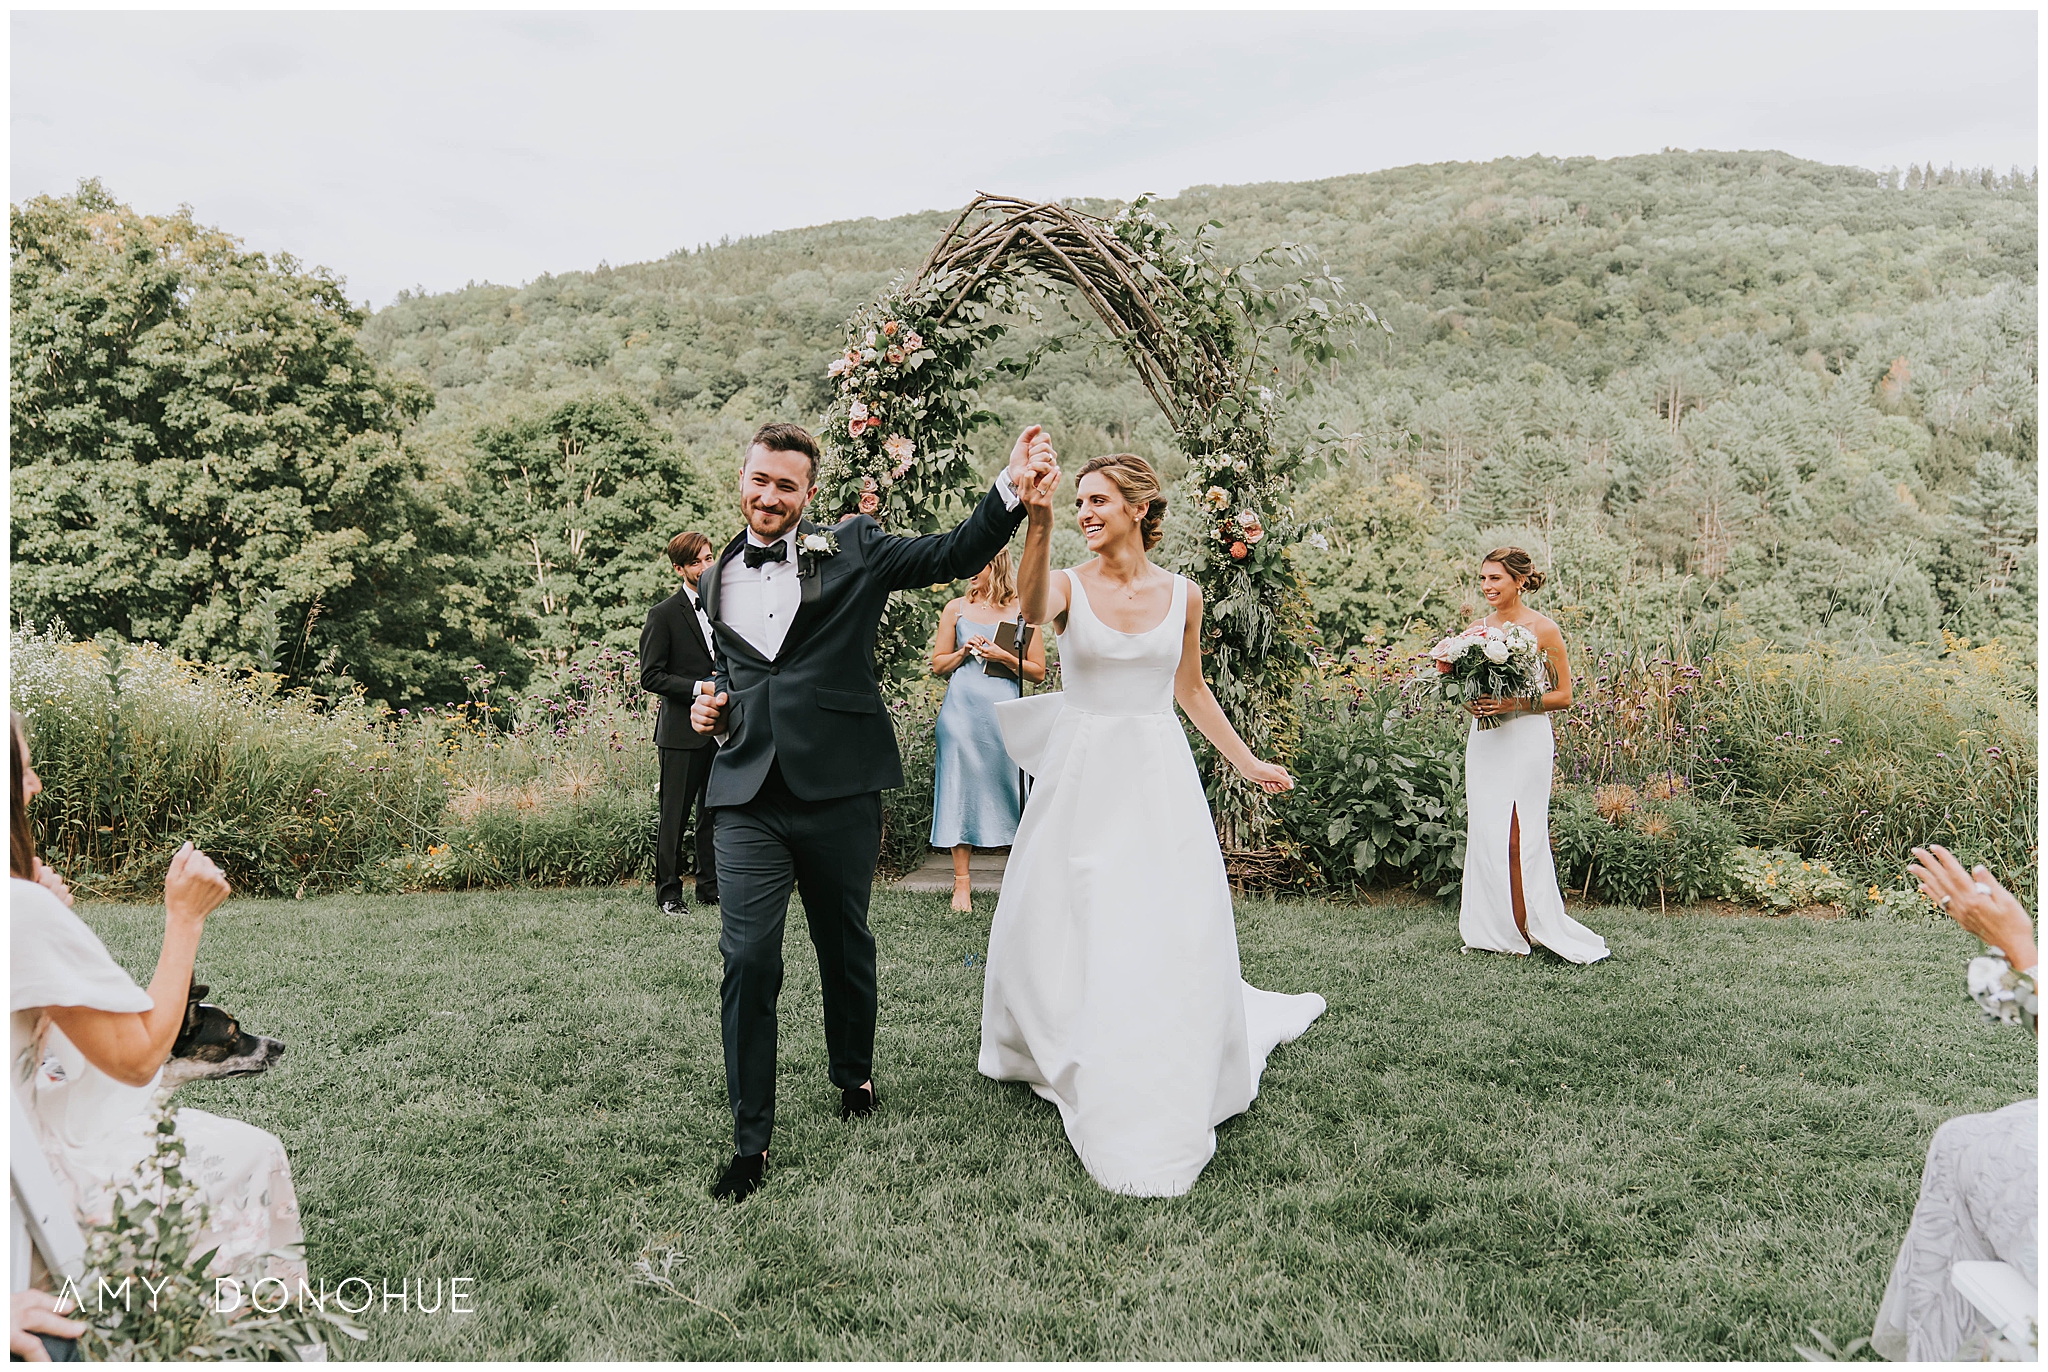 Kelly Way Garden Ceremony | Woodstock Inn & Resort | Vermont Wedding Photographer | © Amy Donohue Photography